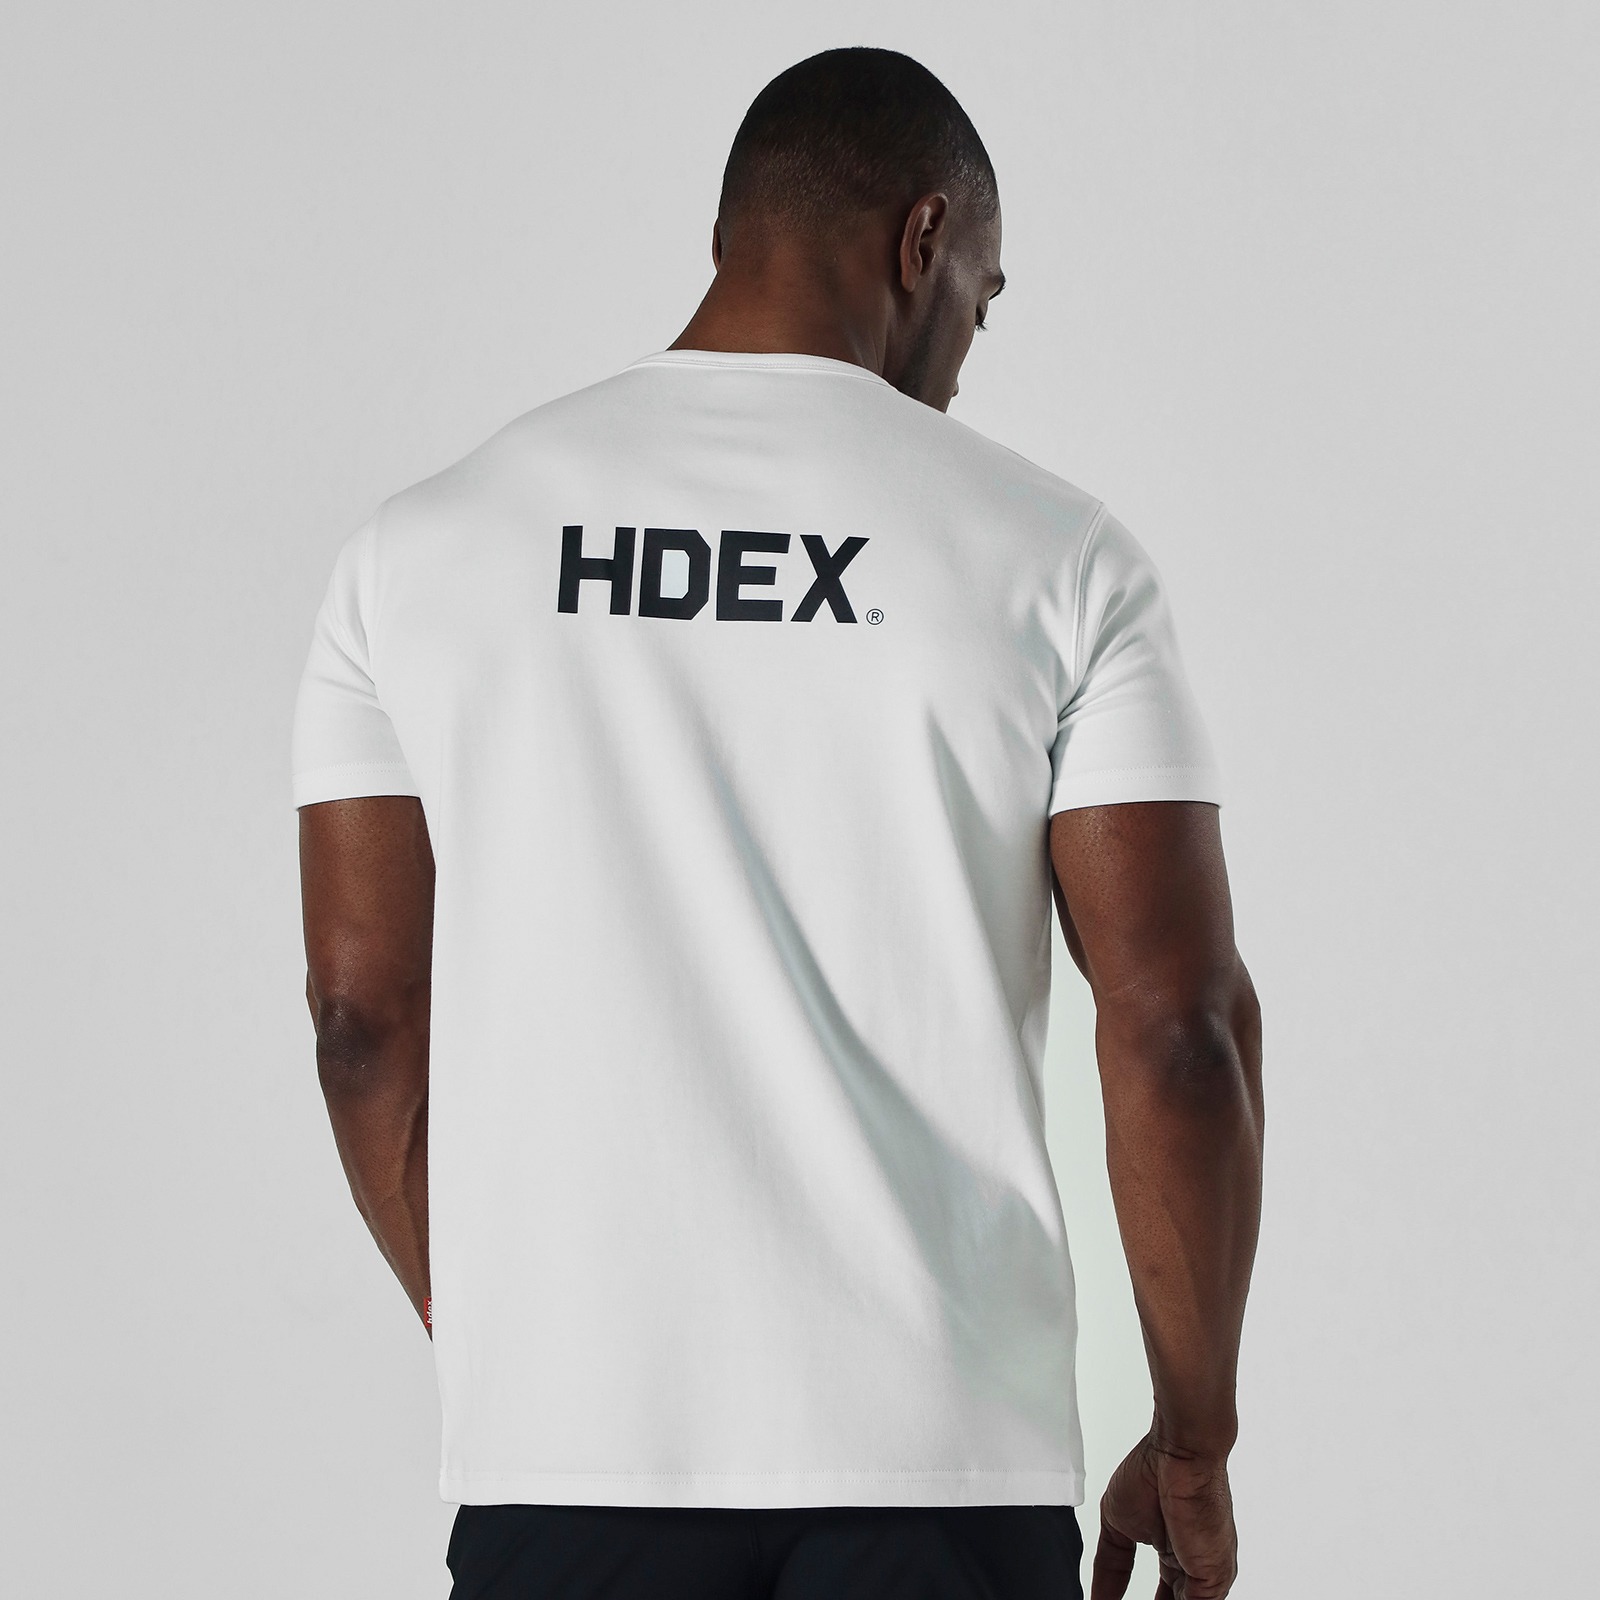 HDEX, 메인 백로고 머슬핏 반팔티 2 color